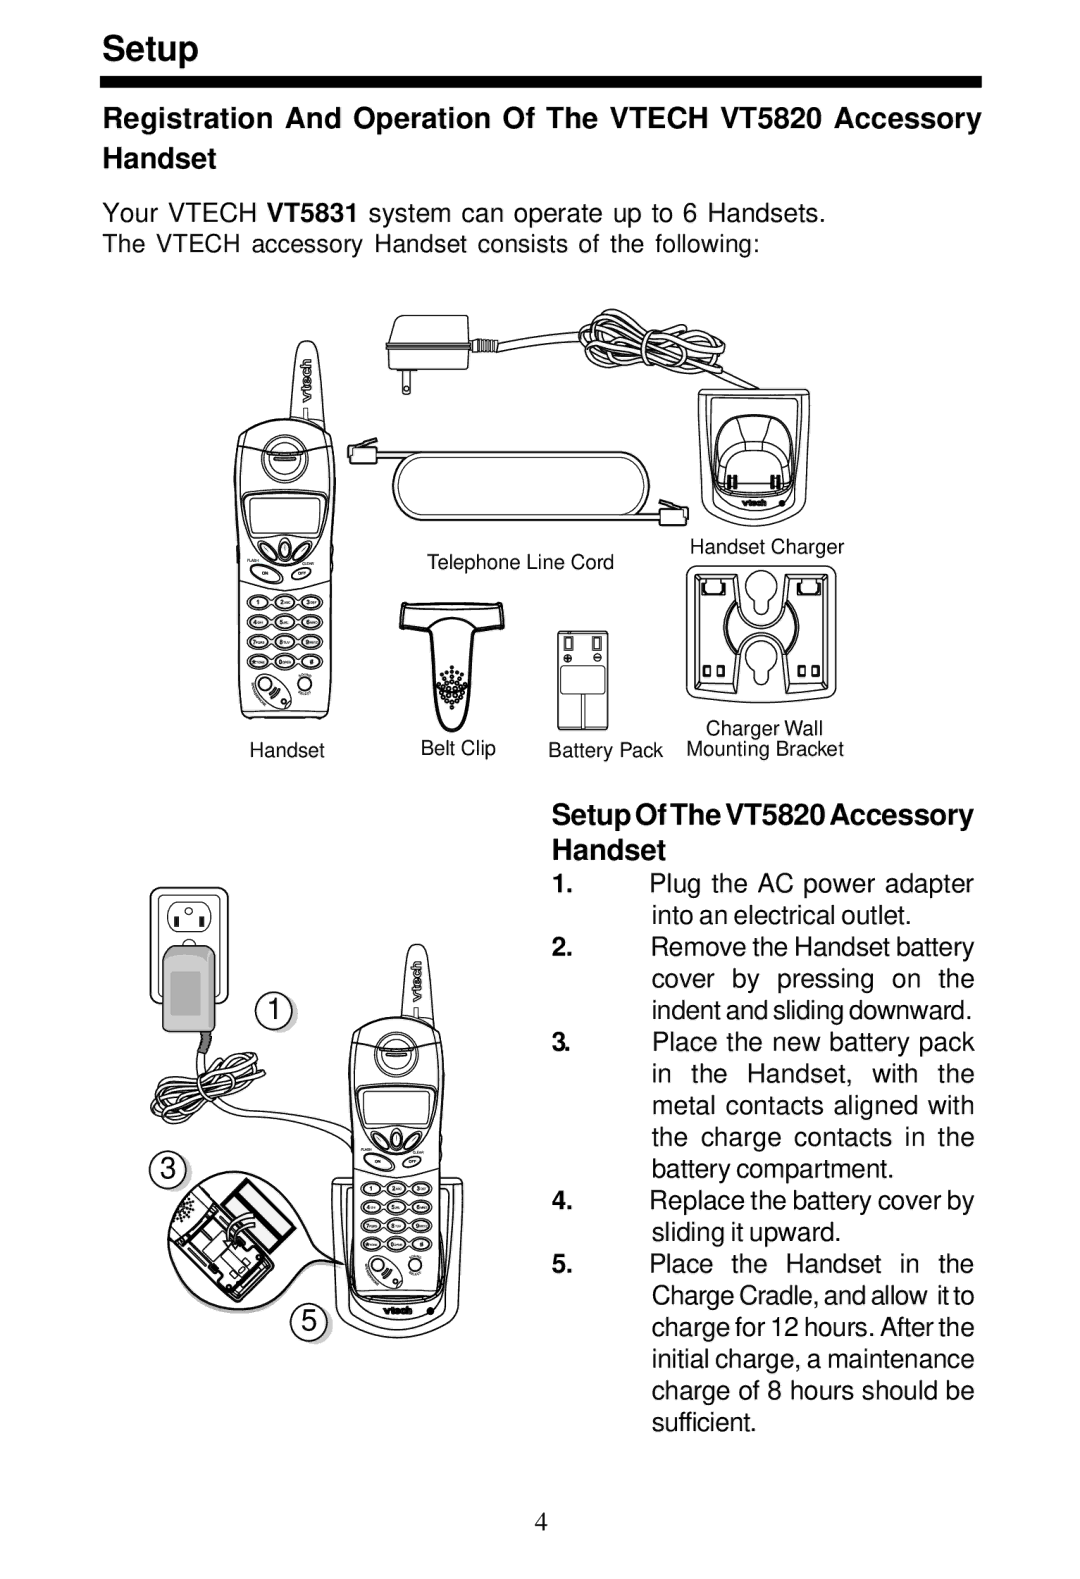 VTech user manual Setup Of The VT5820 Accessory Handset 